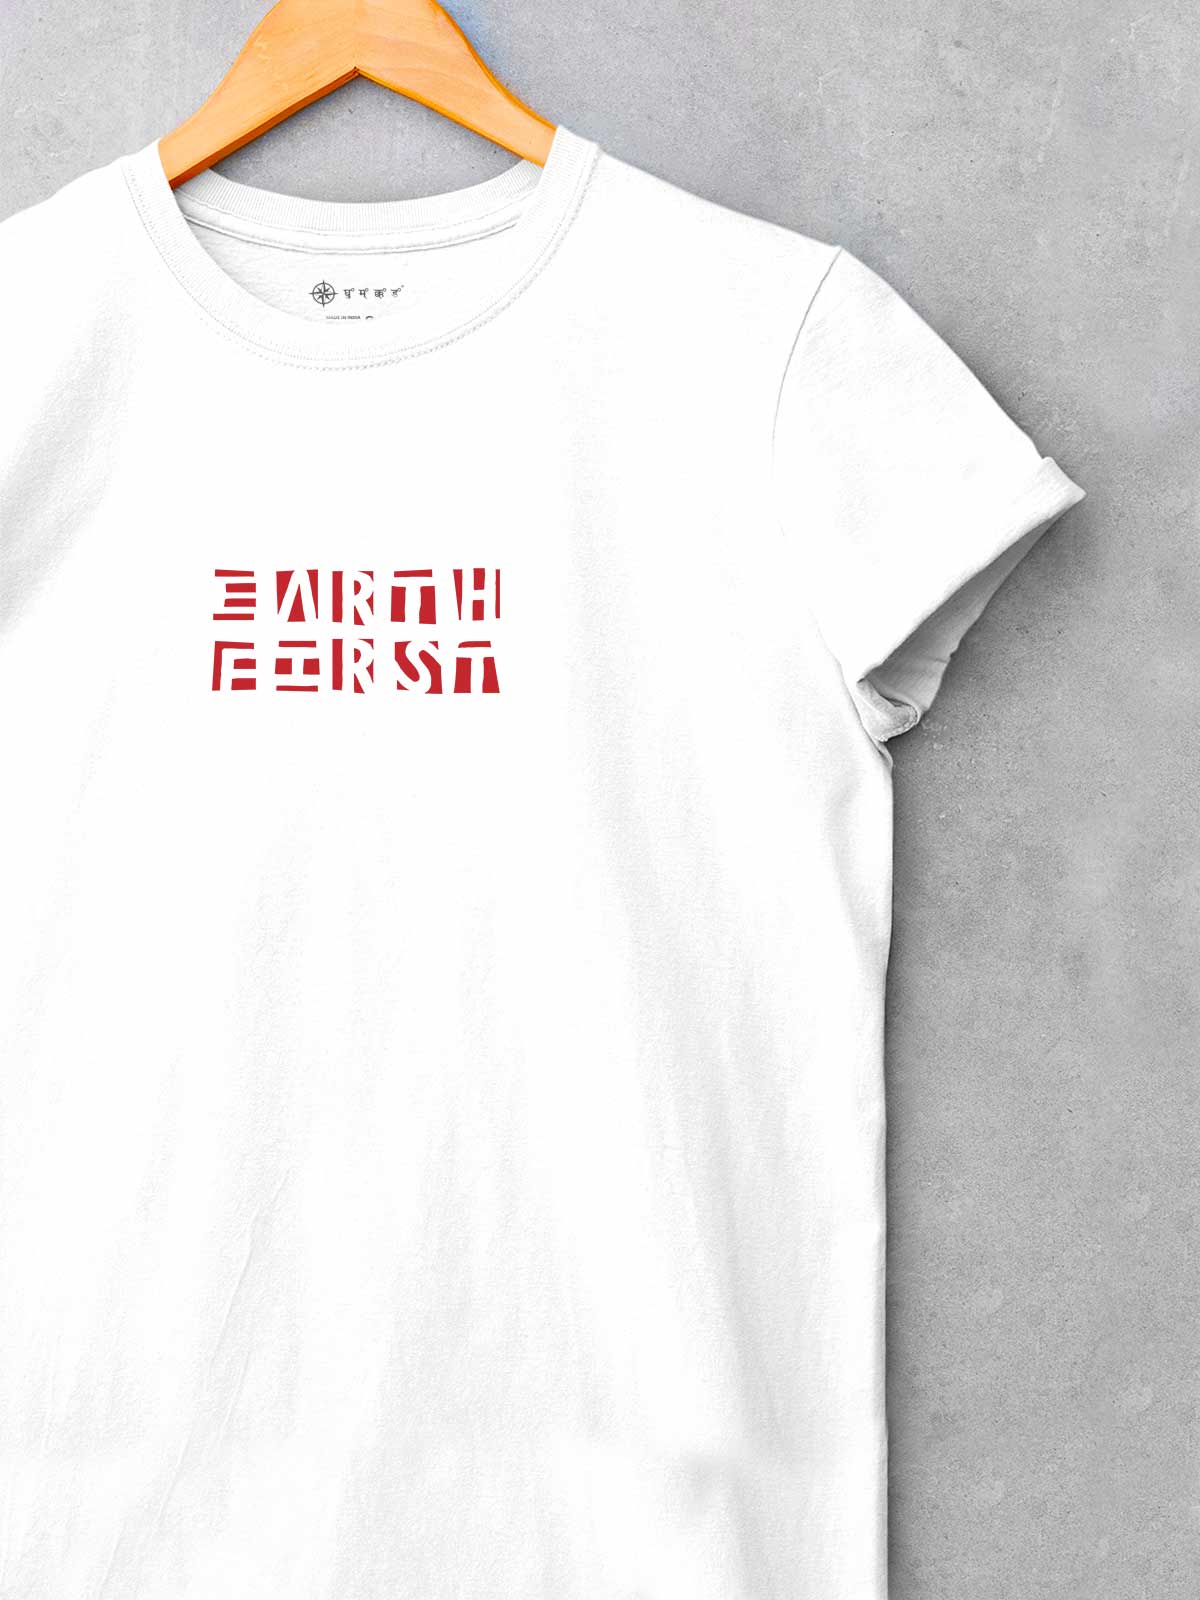 Earth-first-backprint-t-shirt-for-men by Ghumakkad